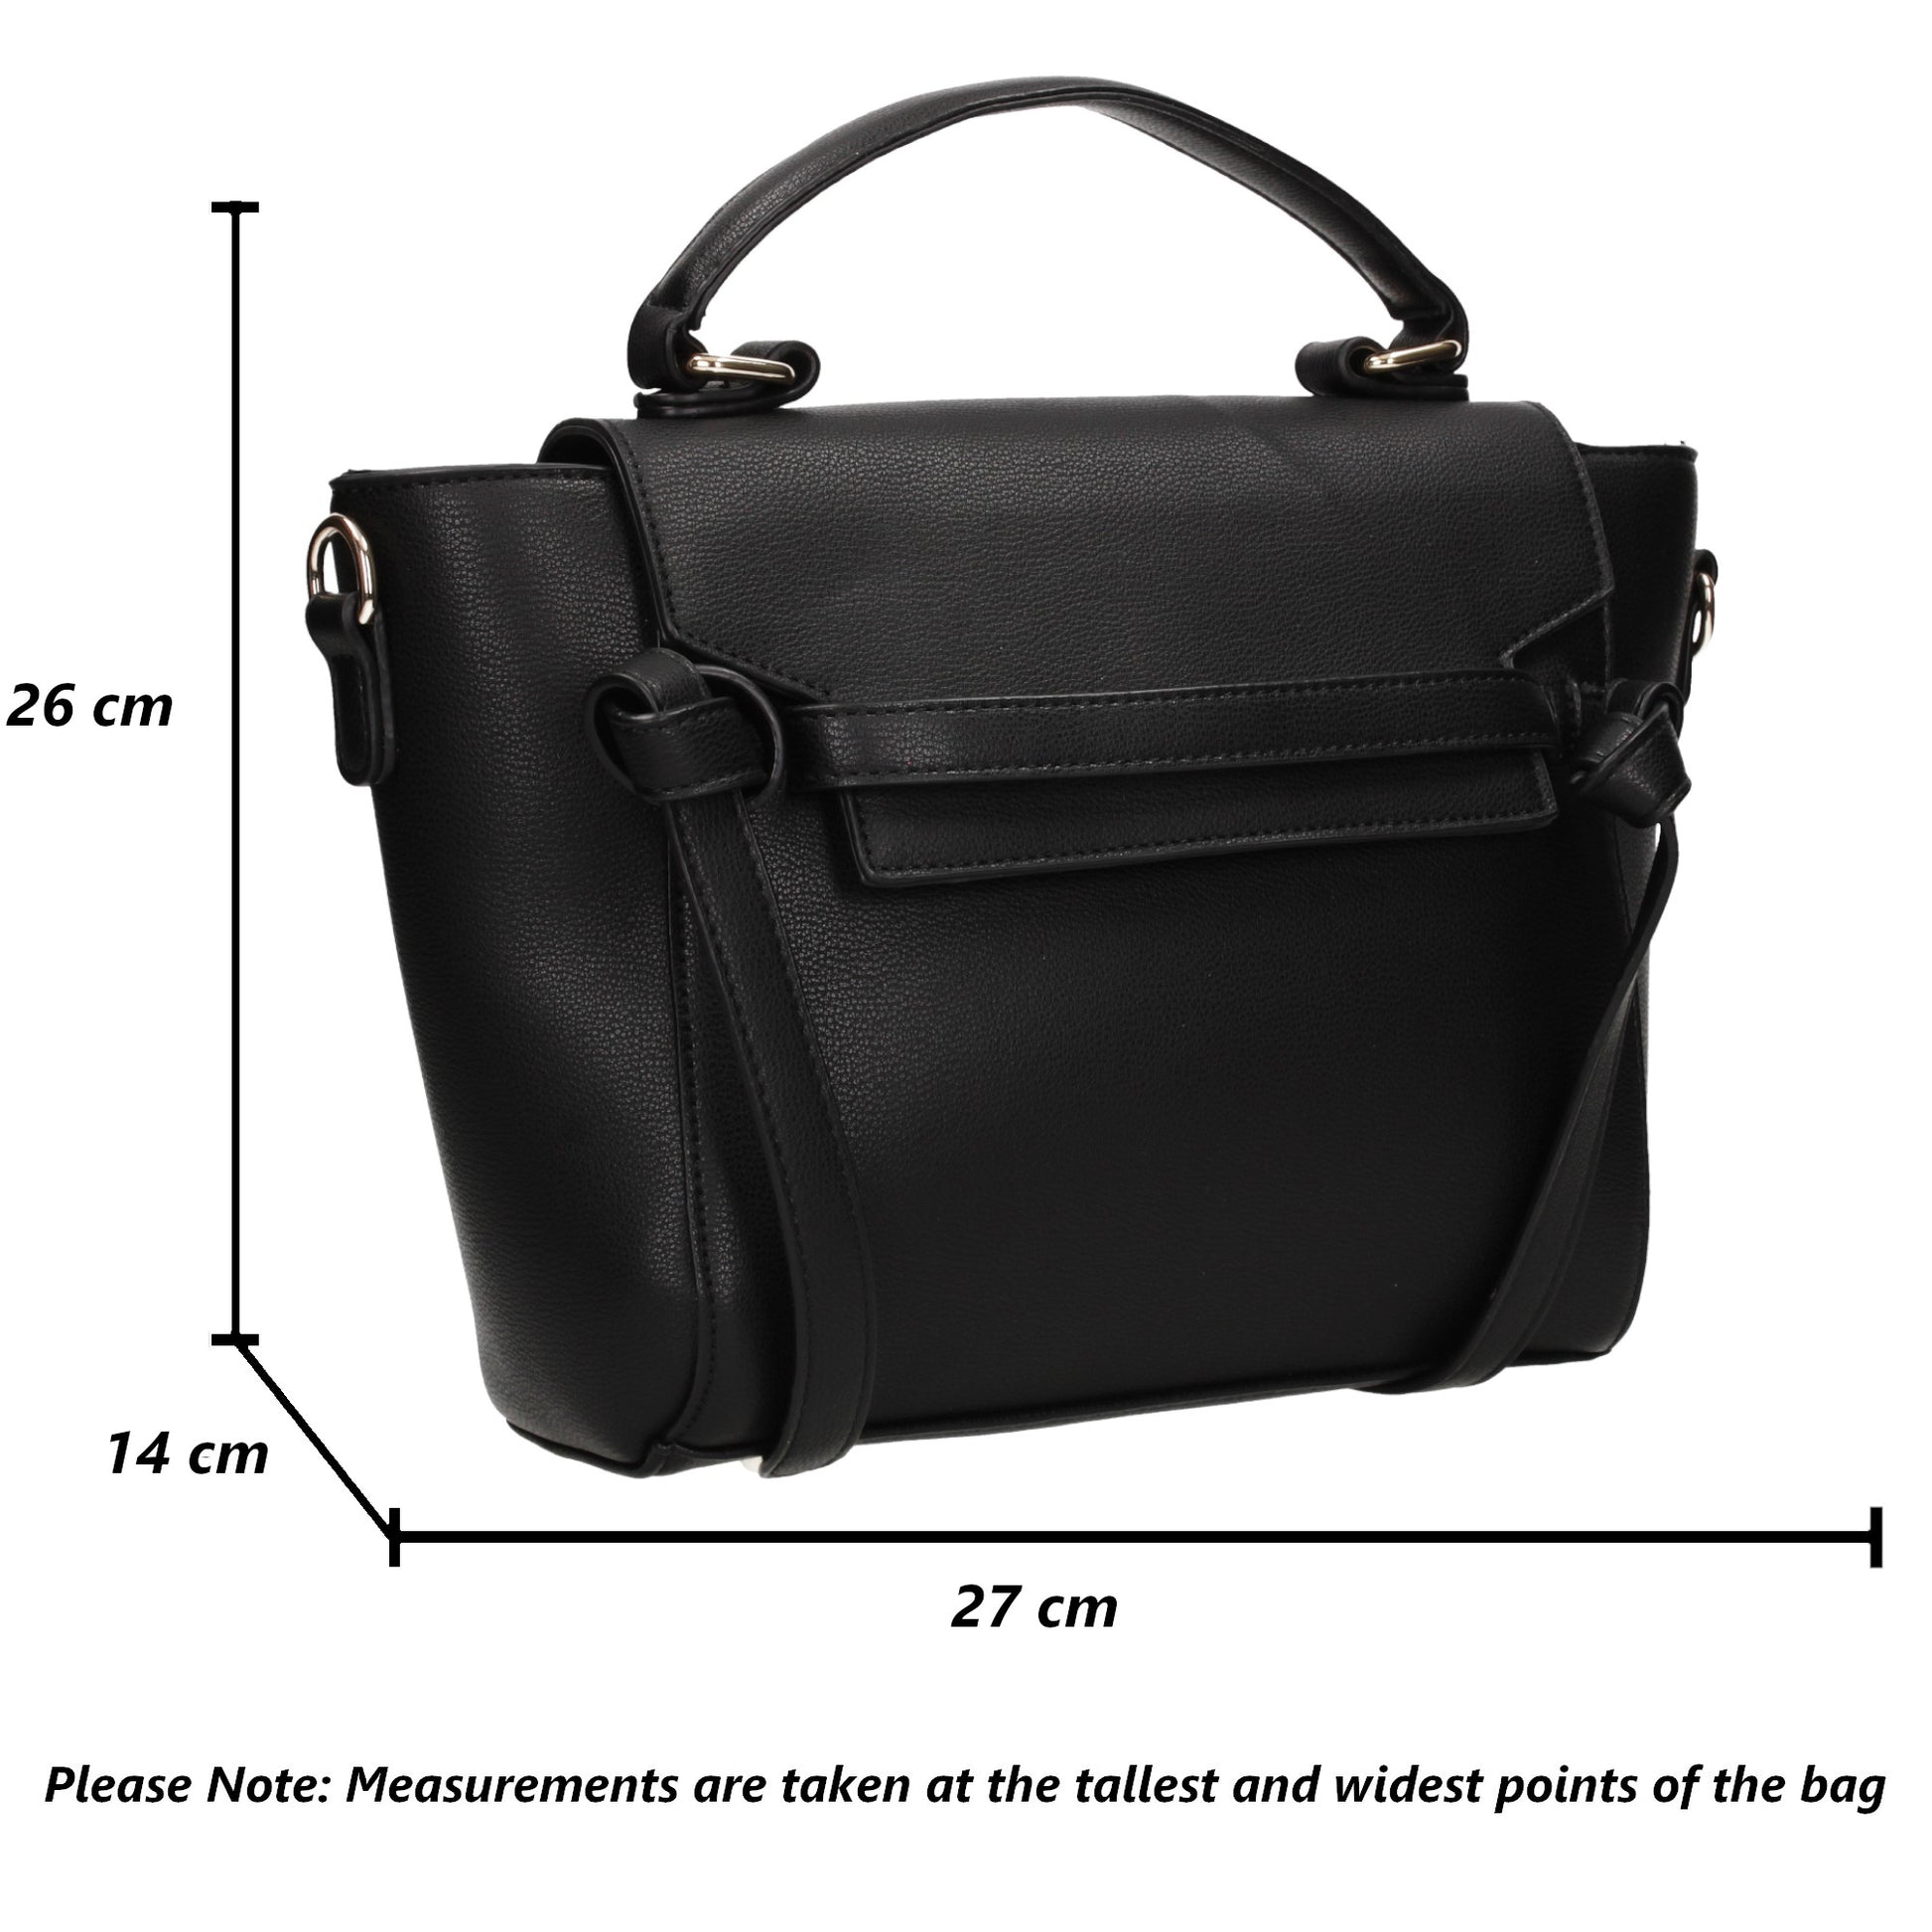 Buy your Juana Handbag Black Today! Buy with confidence from Swankyswans